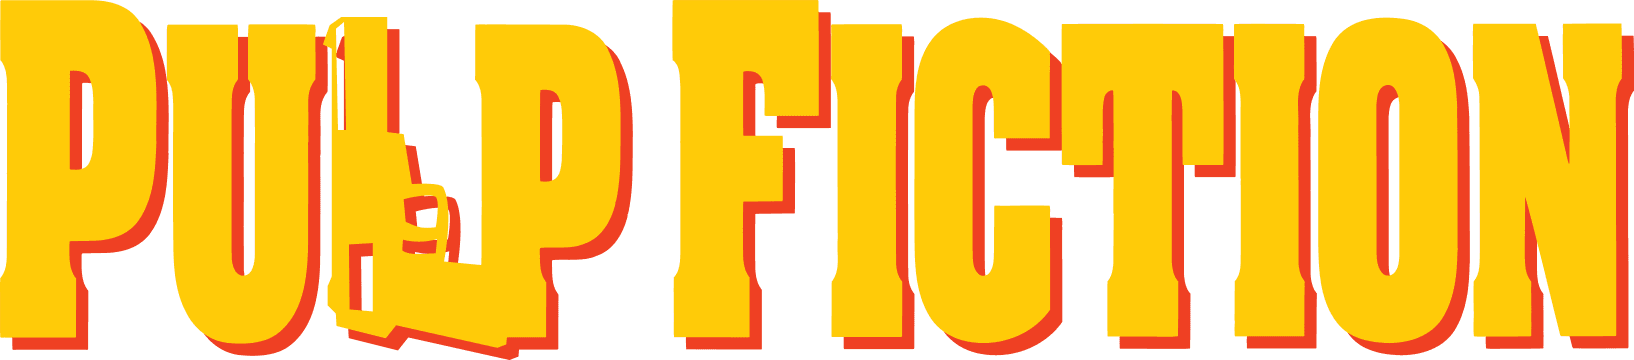 Pulp Fiction logo